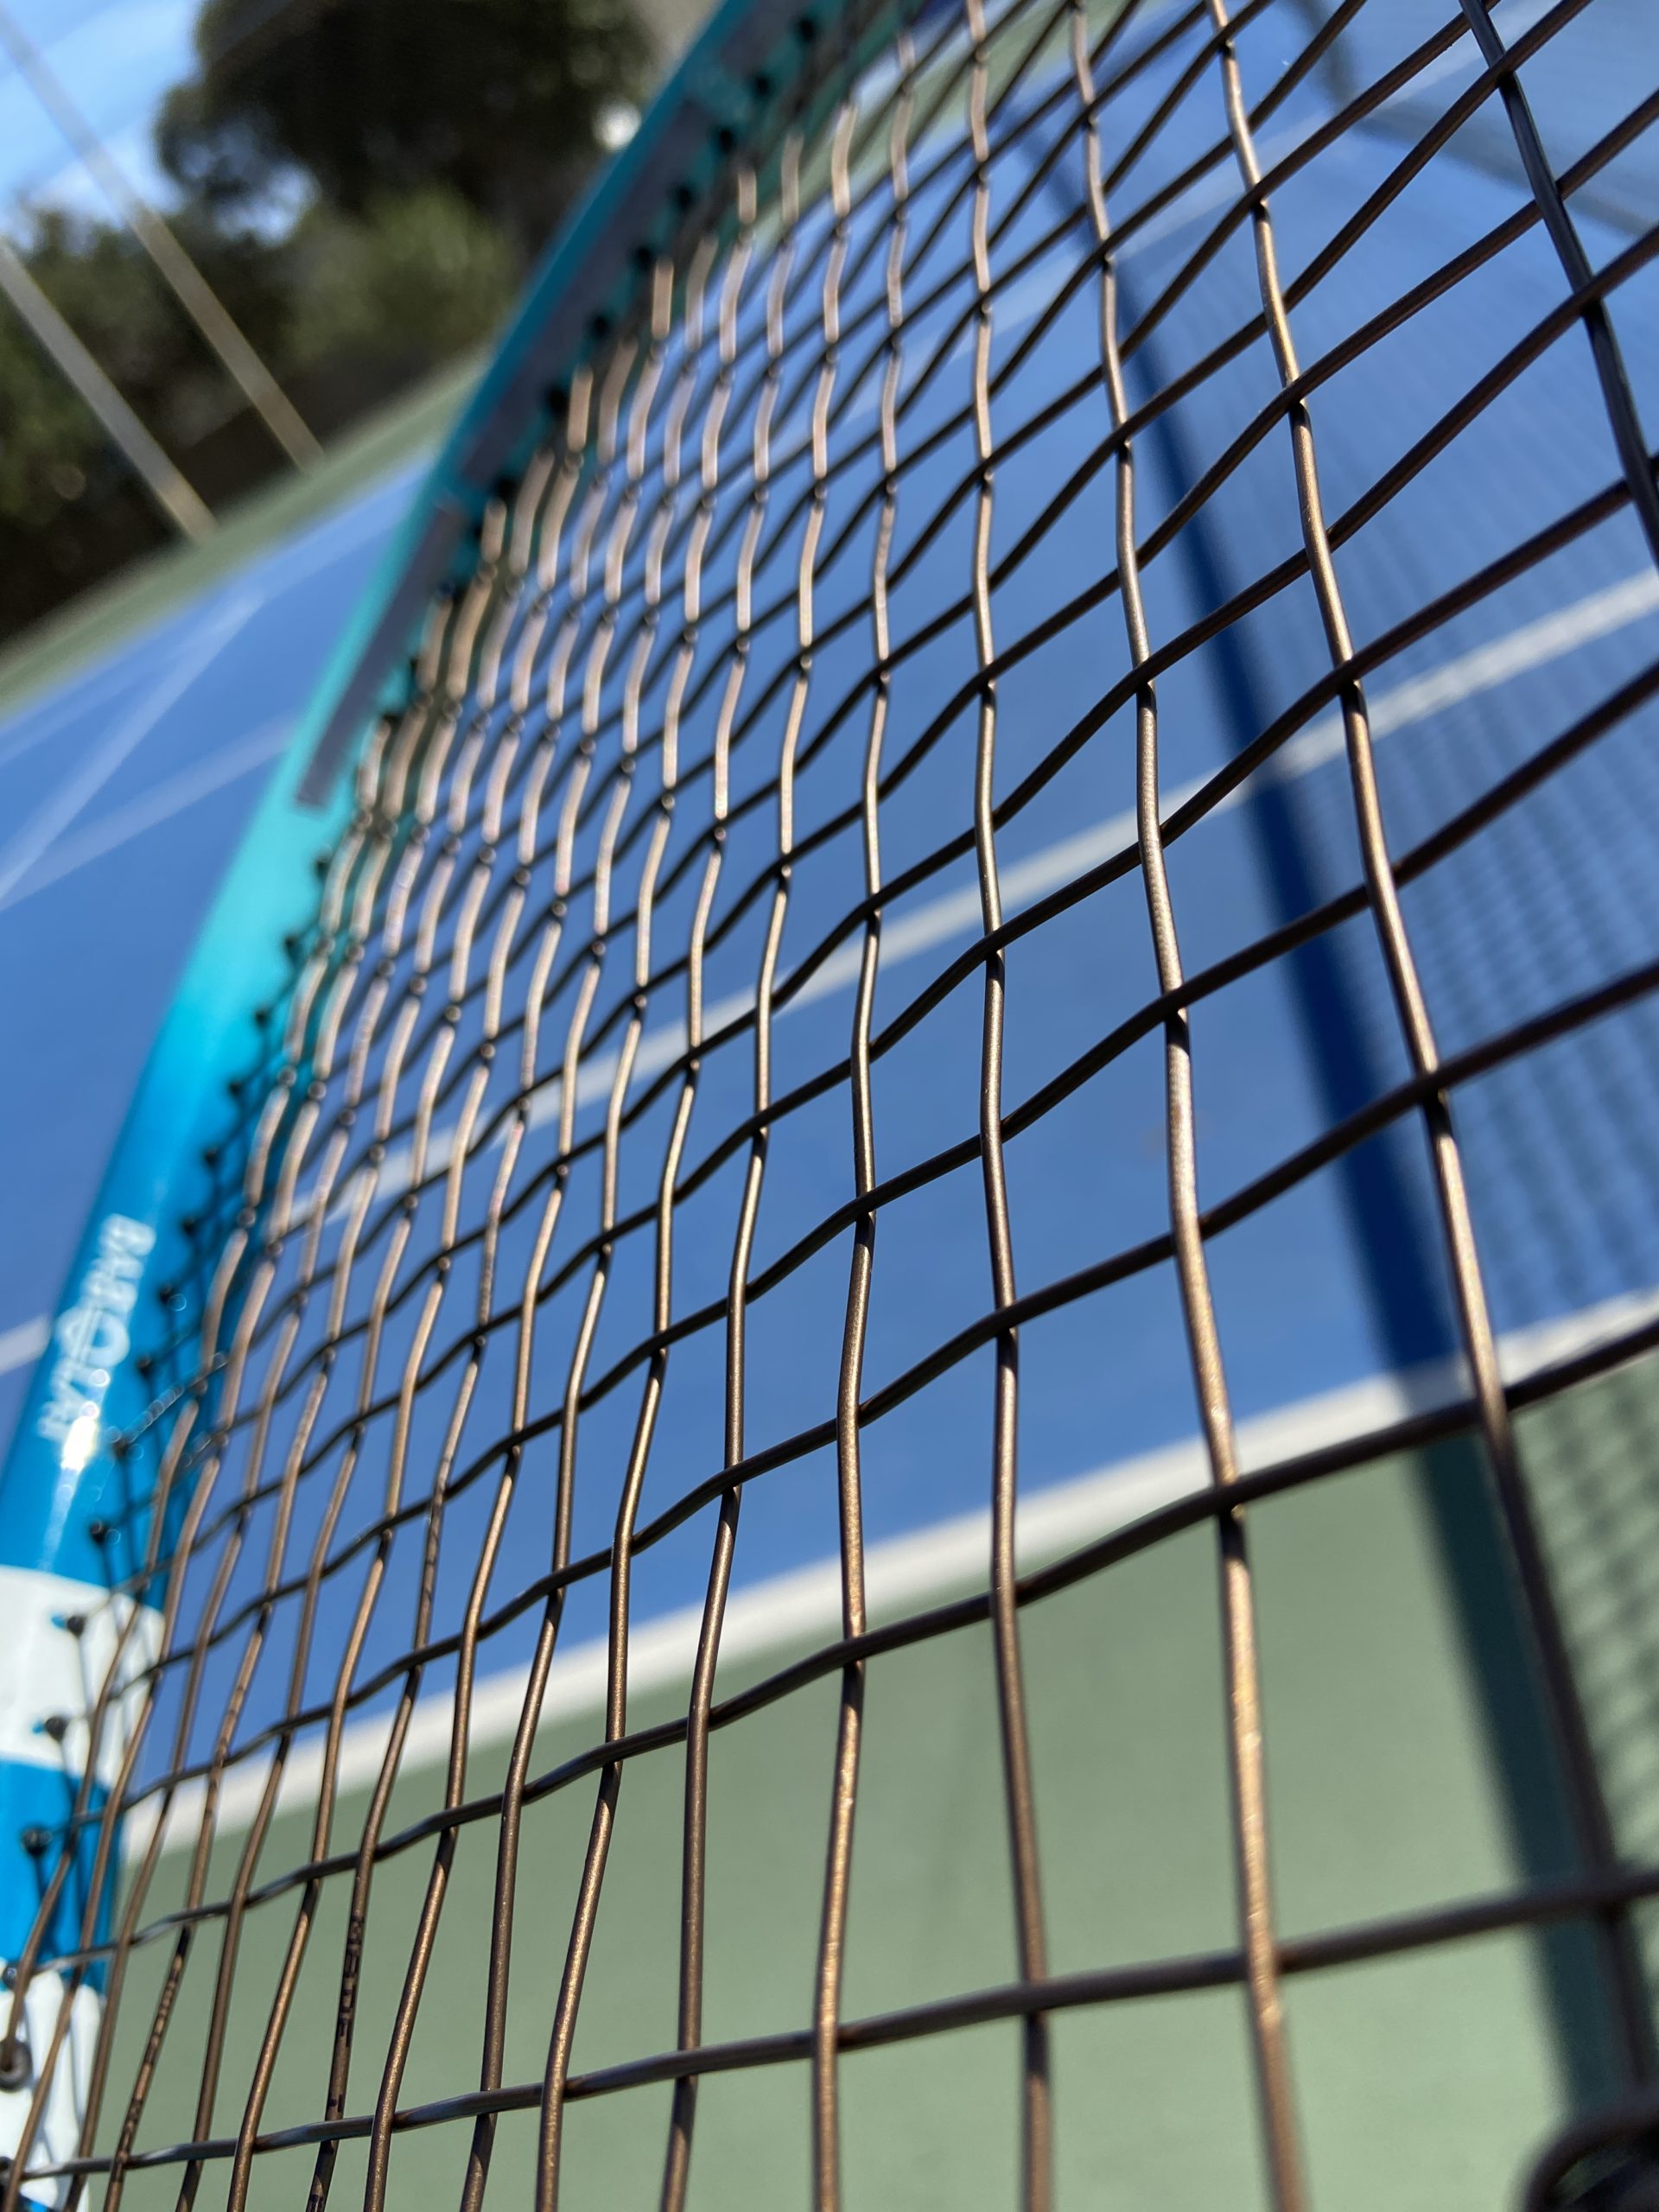 Blue Babolat Hurricane Feel 17-Gauge Tennis String